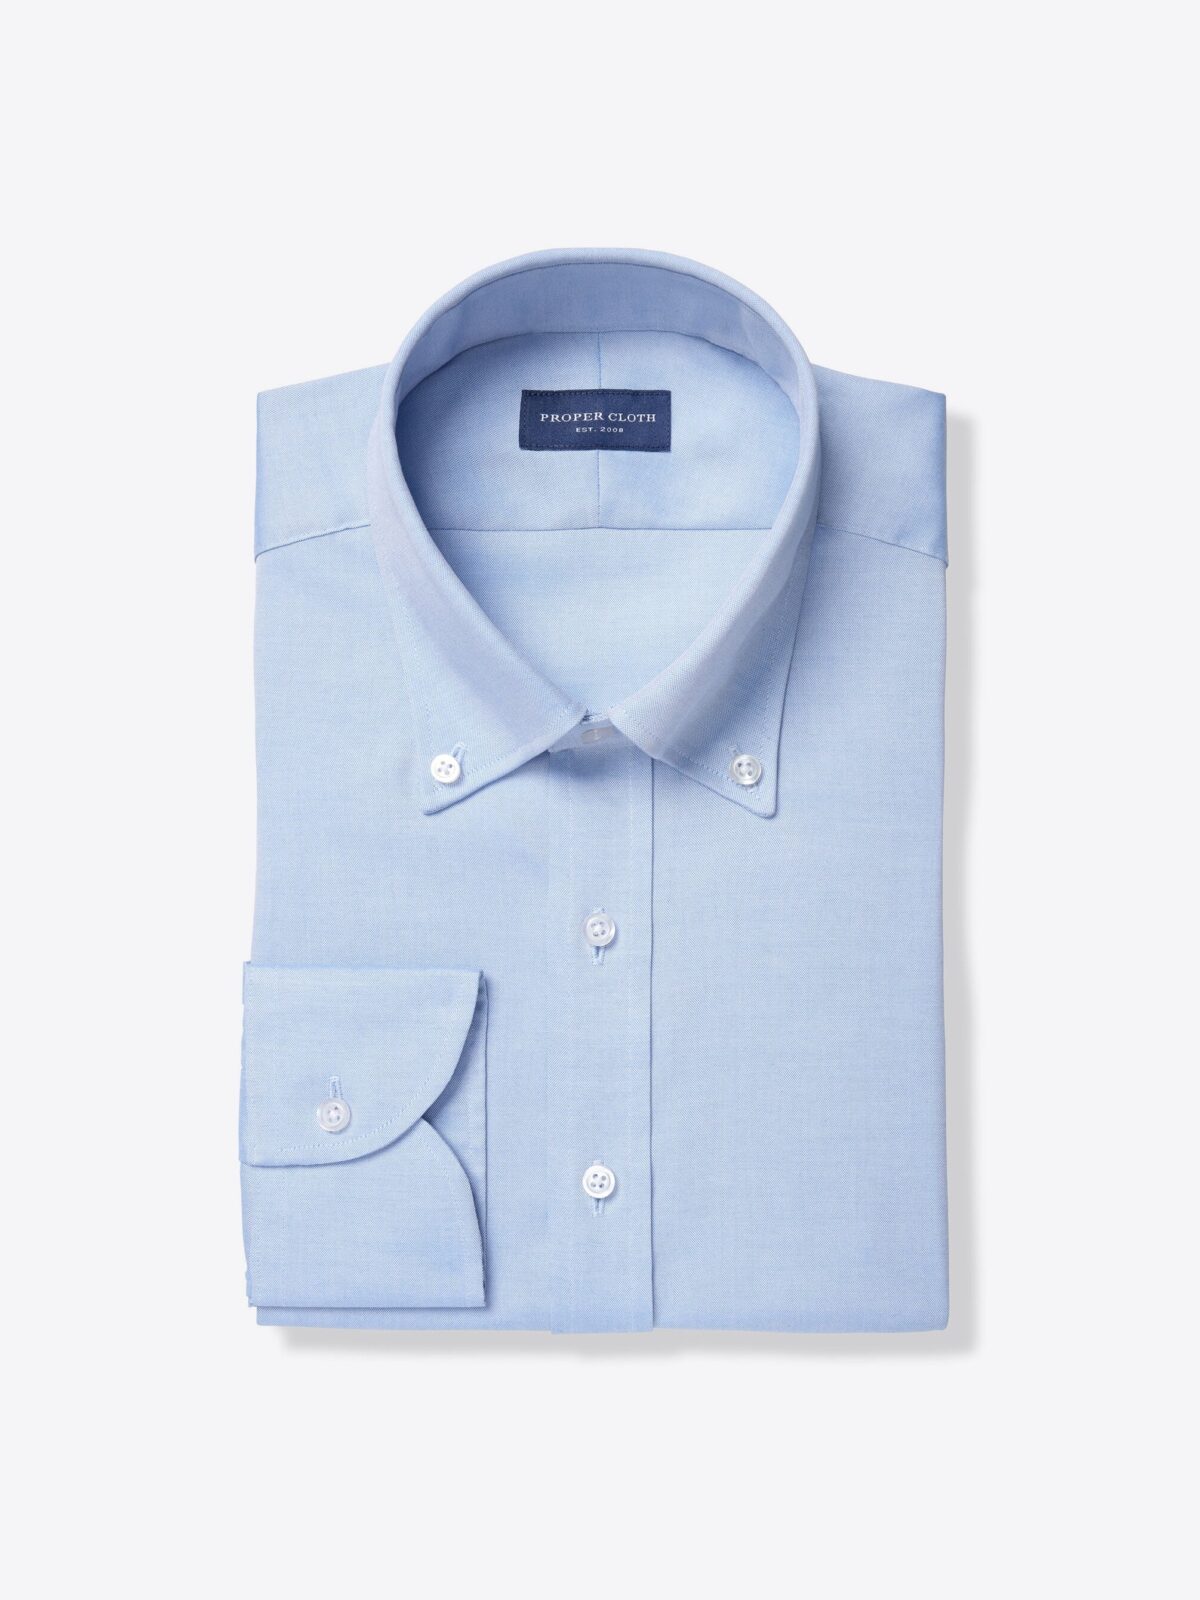 Weston Blue Pinpoint Custom Made Shirt Shirt by Proper Cloth